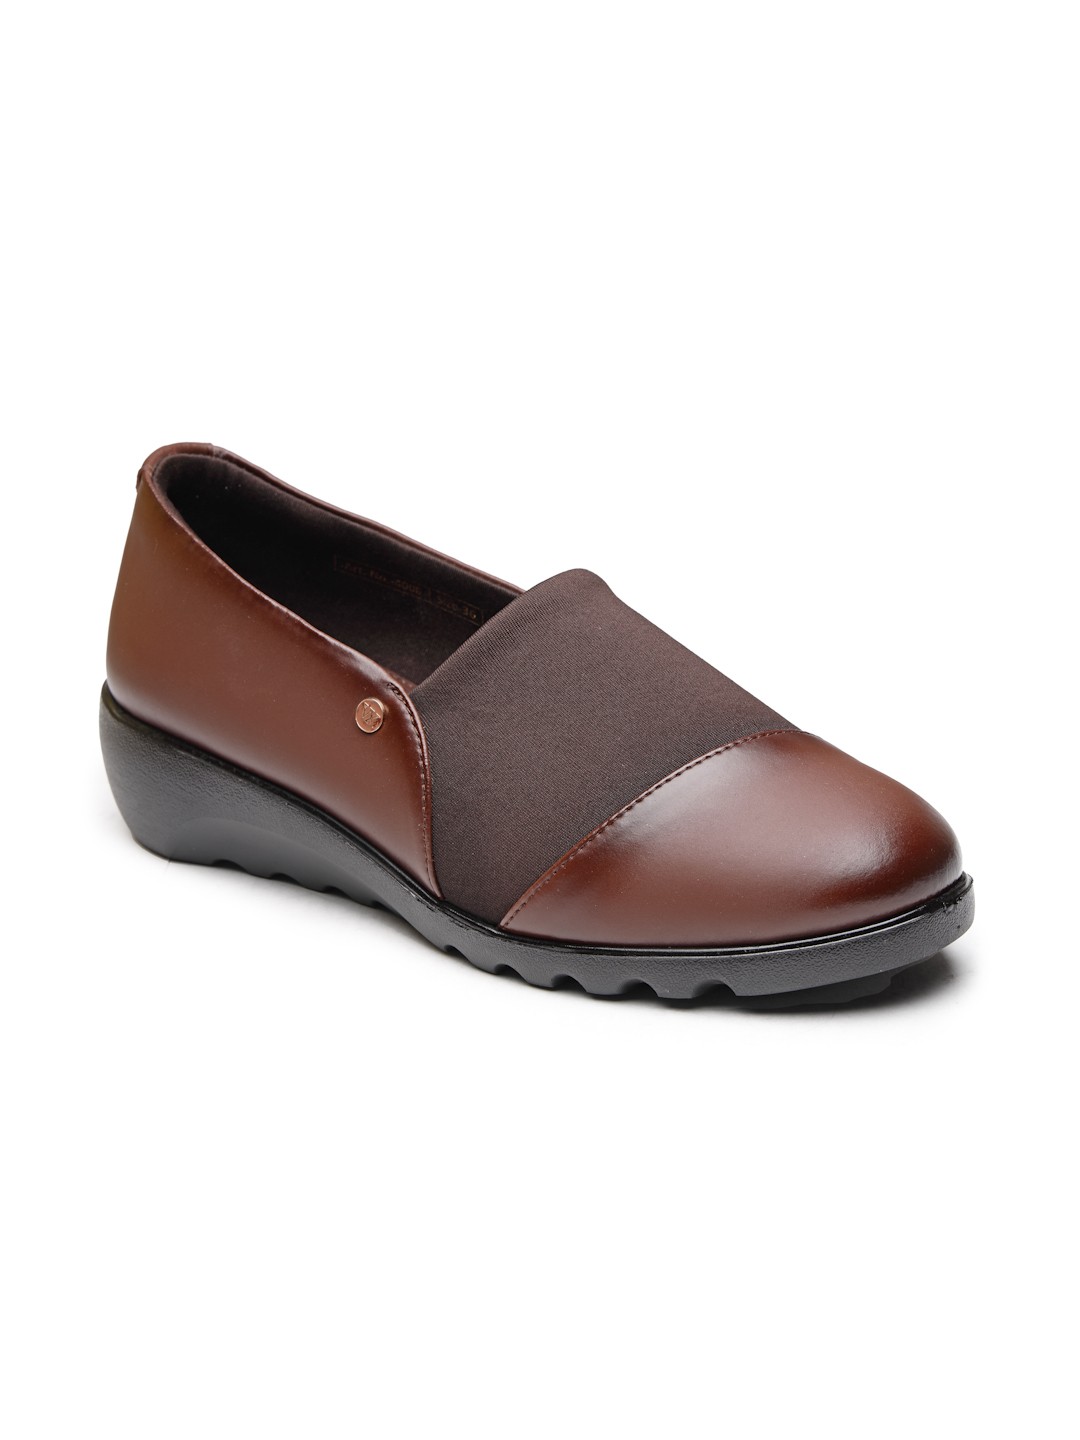 Buy Von Wellx Germany Comfort Women's Brown Casual Shoes Ayla Online in Pune